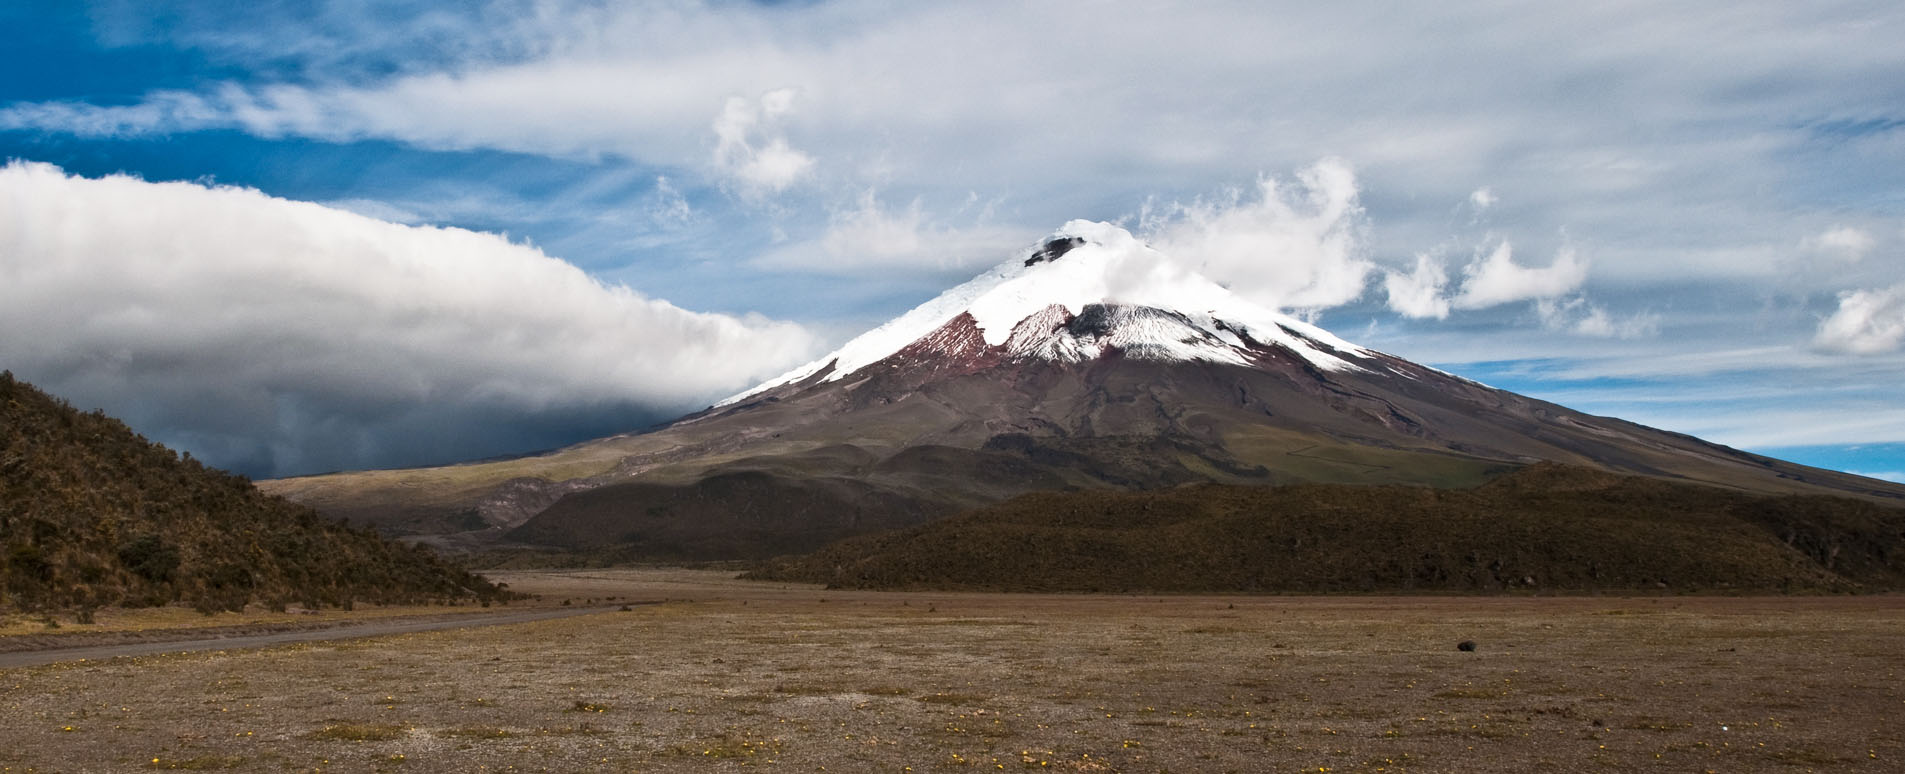 Ecuador Travel Guide - Geodyssey